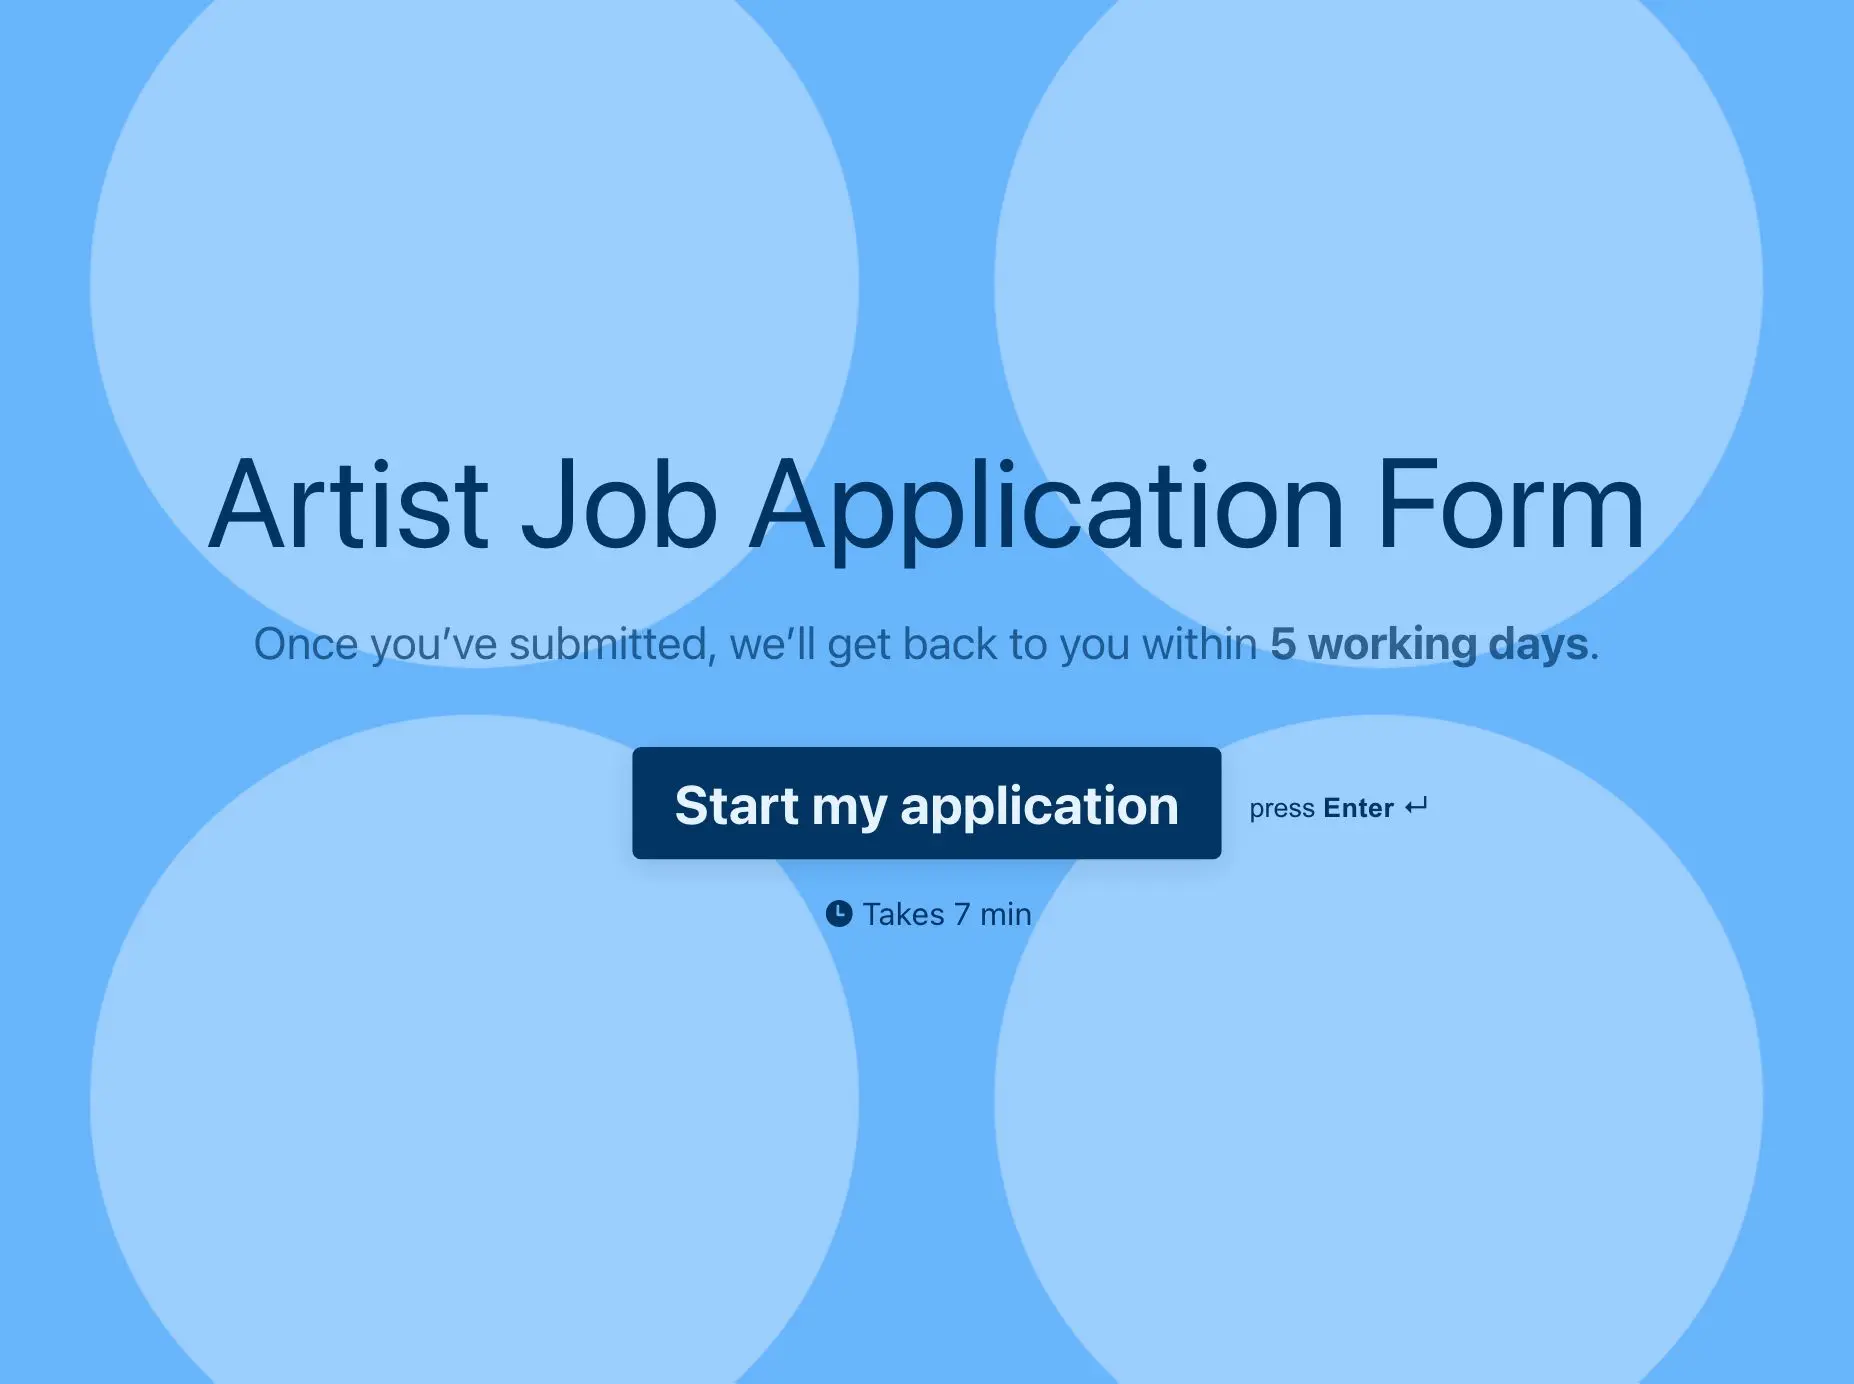 Artist Job Application Form Template Hero